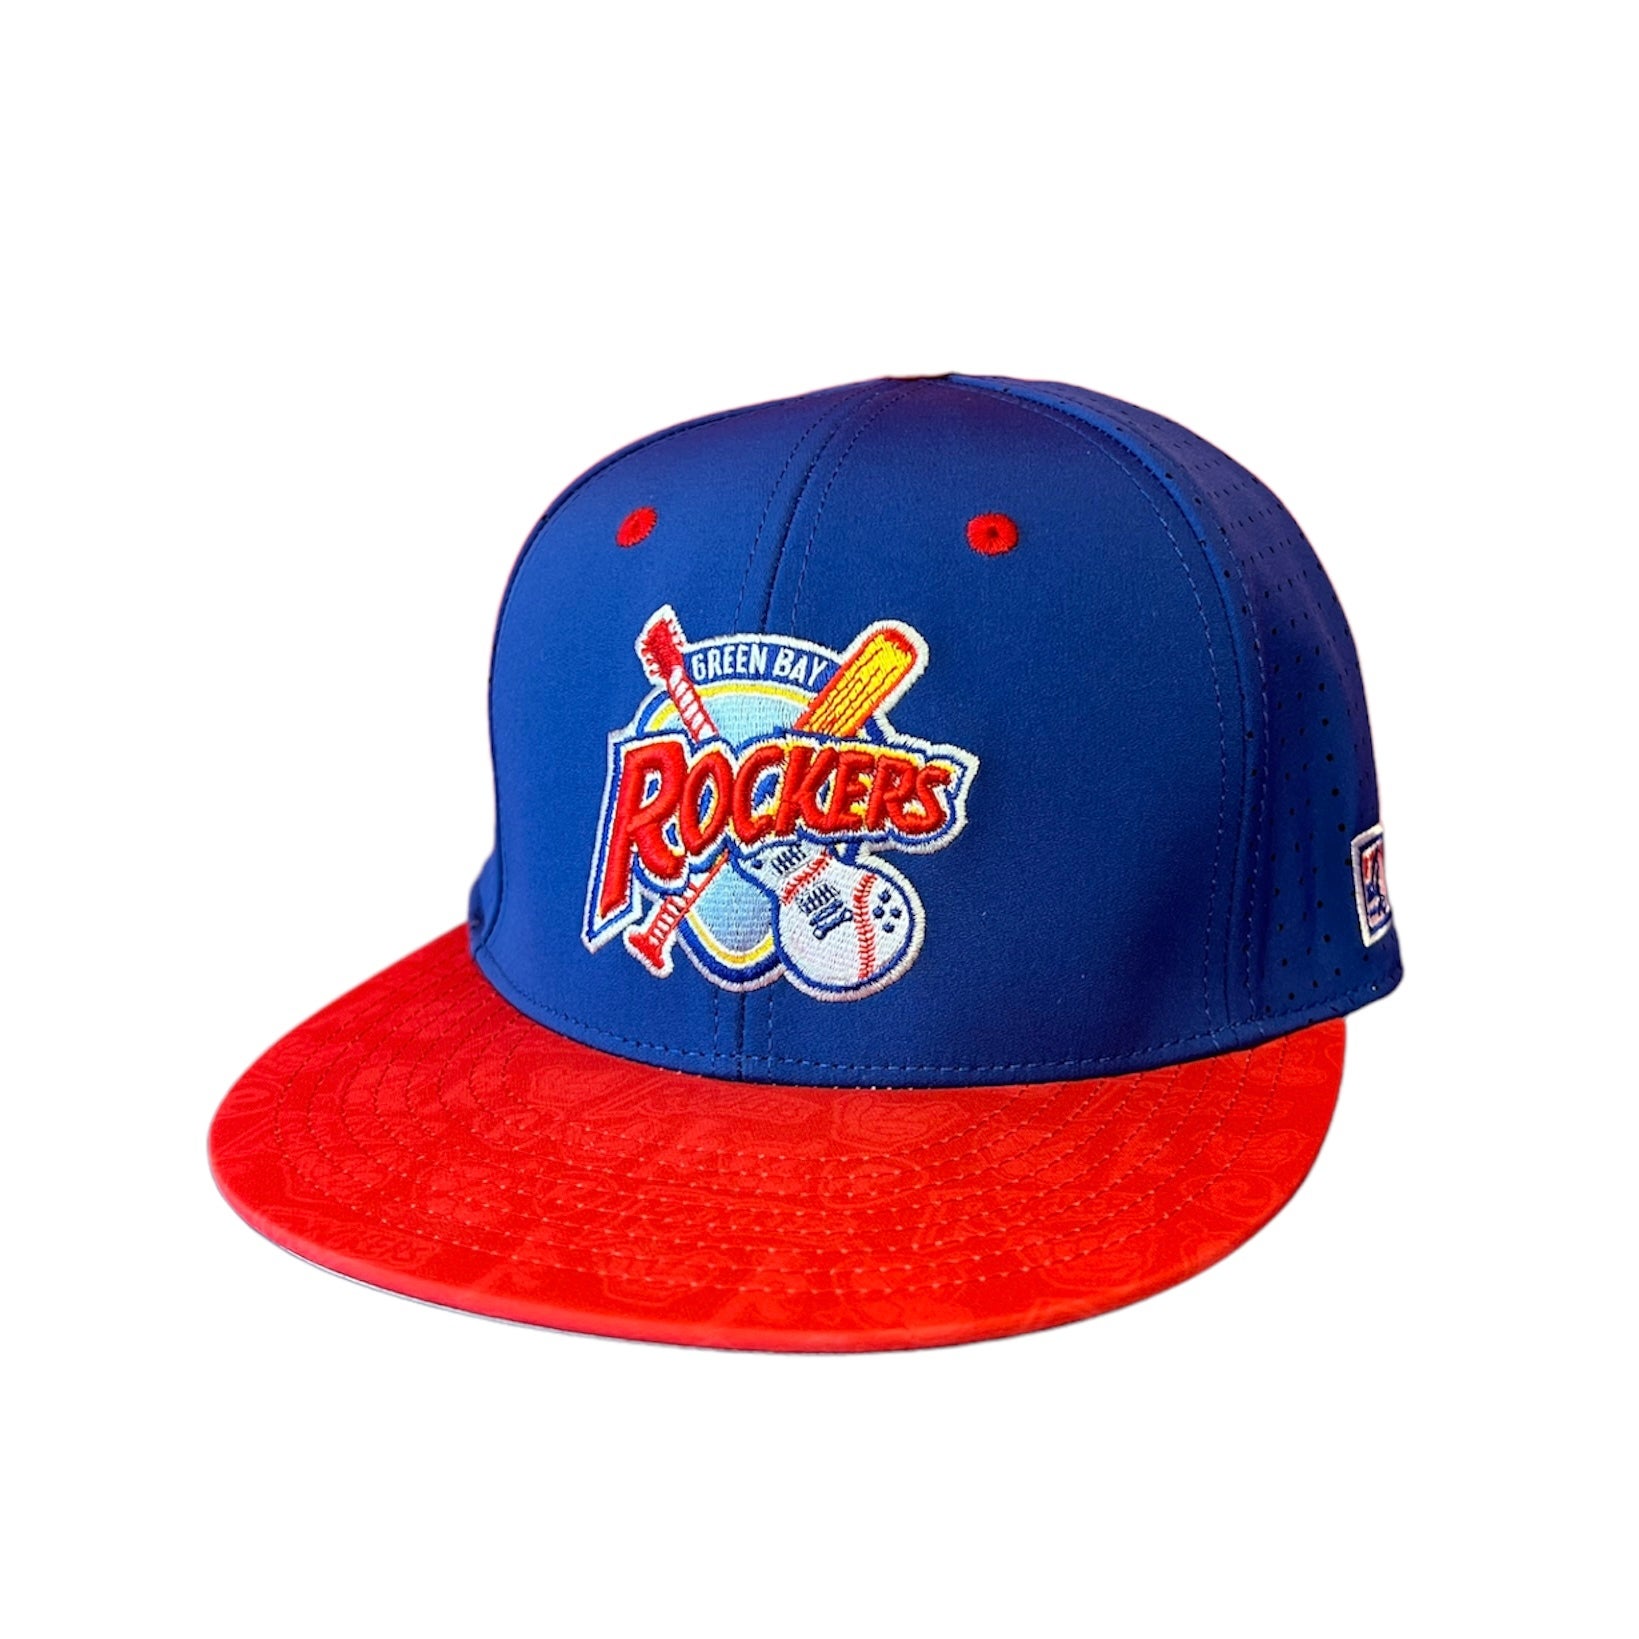 Rockers Logo Red and Blue Flat Brim Hat | Green Bay Rockers